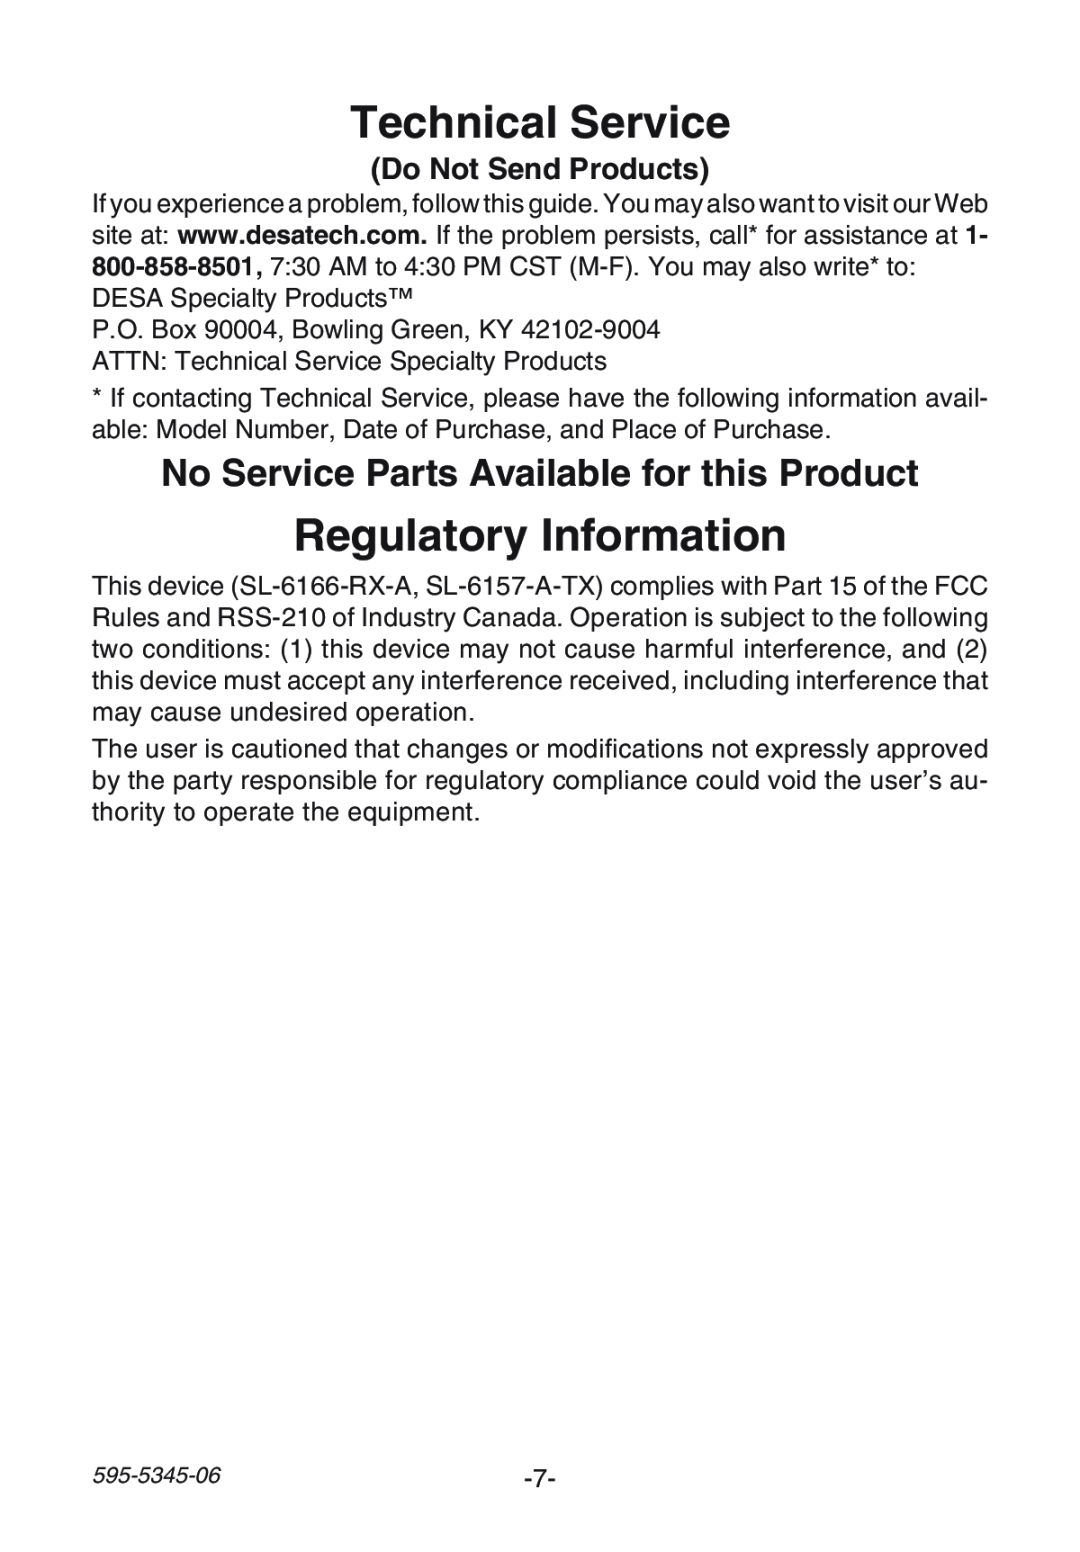 Heath Zenith SL-6157 manual Technical Service, Regulatory Information, Do Not Send Products 